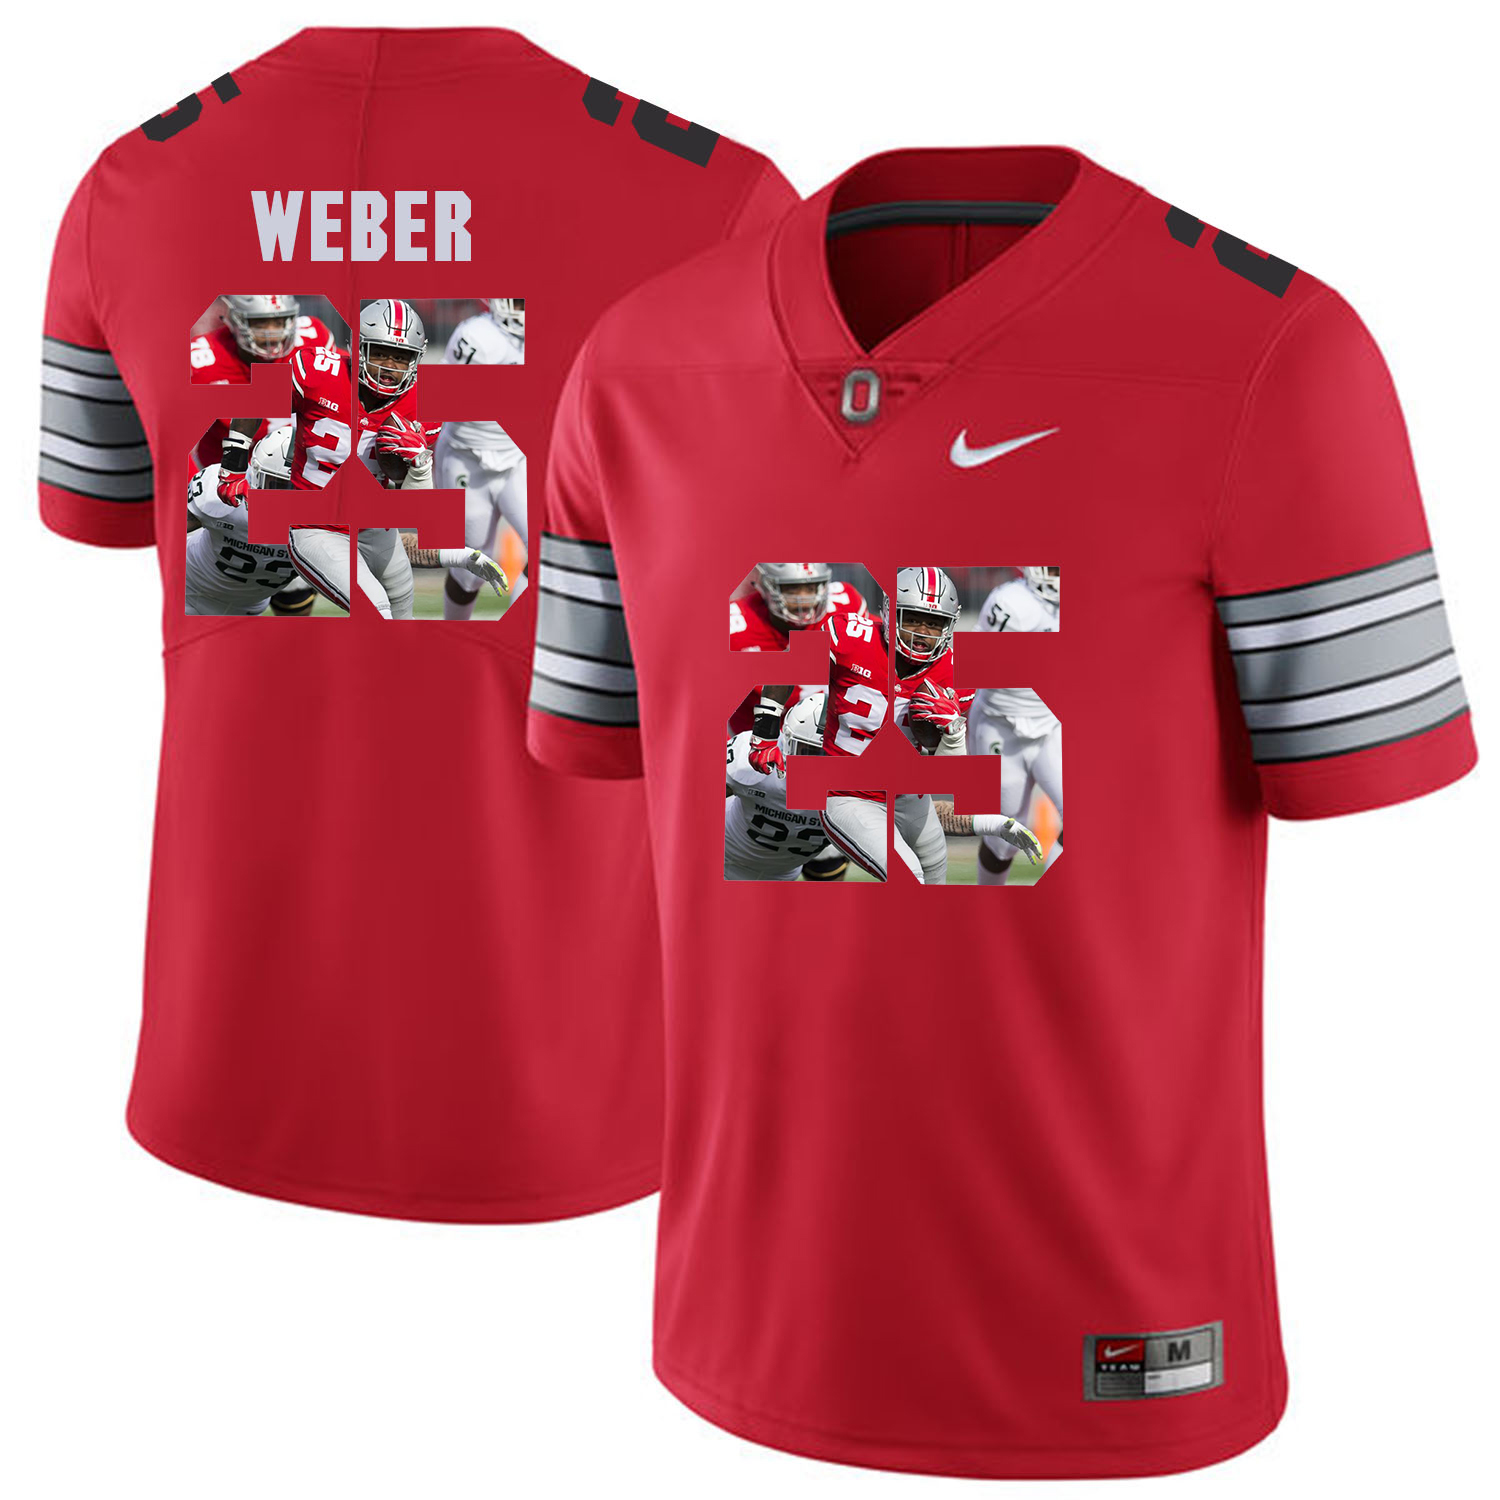 Men Ohio State 25 Weber Red Fashion Edition Customized NCAA Jerseys